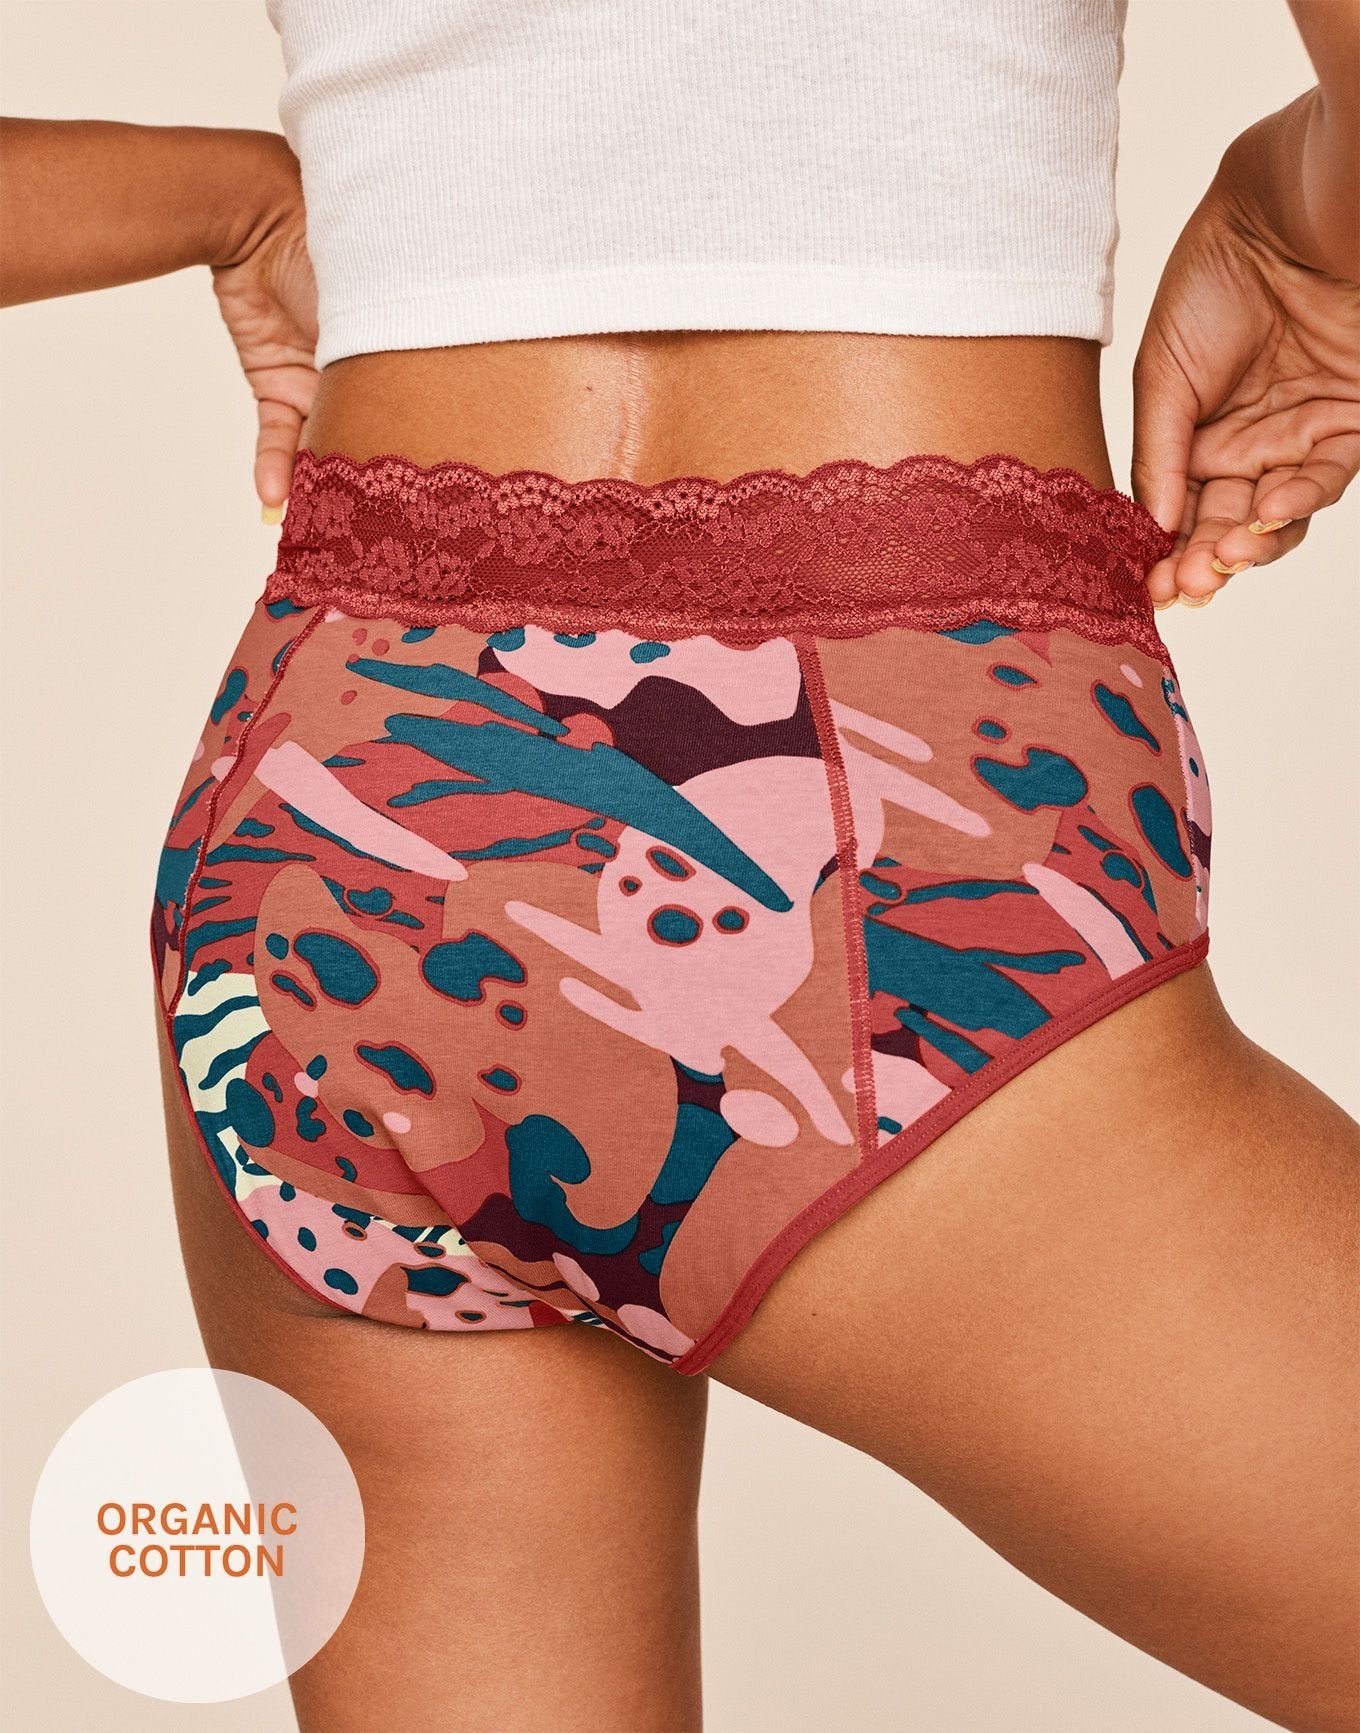 best PFAS-free organic period panties! Ive been wearing reusable